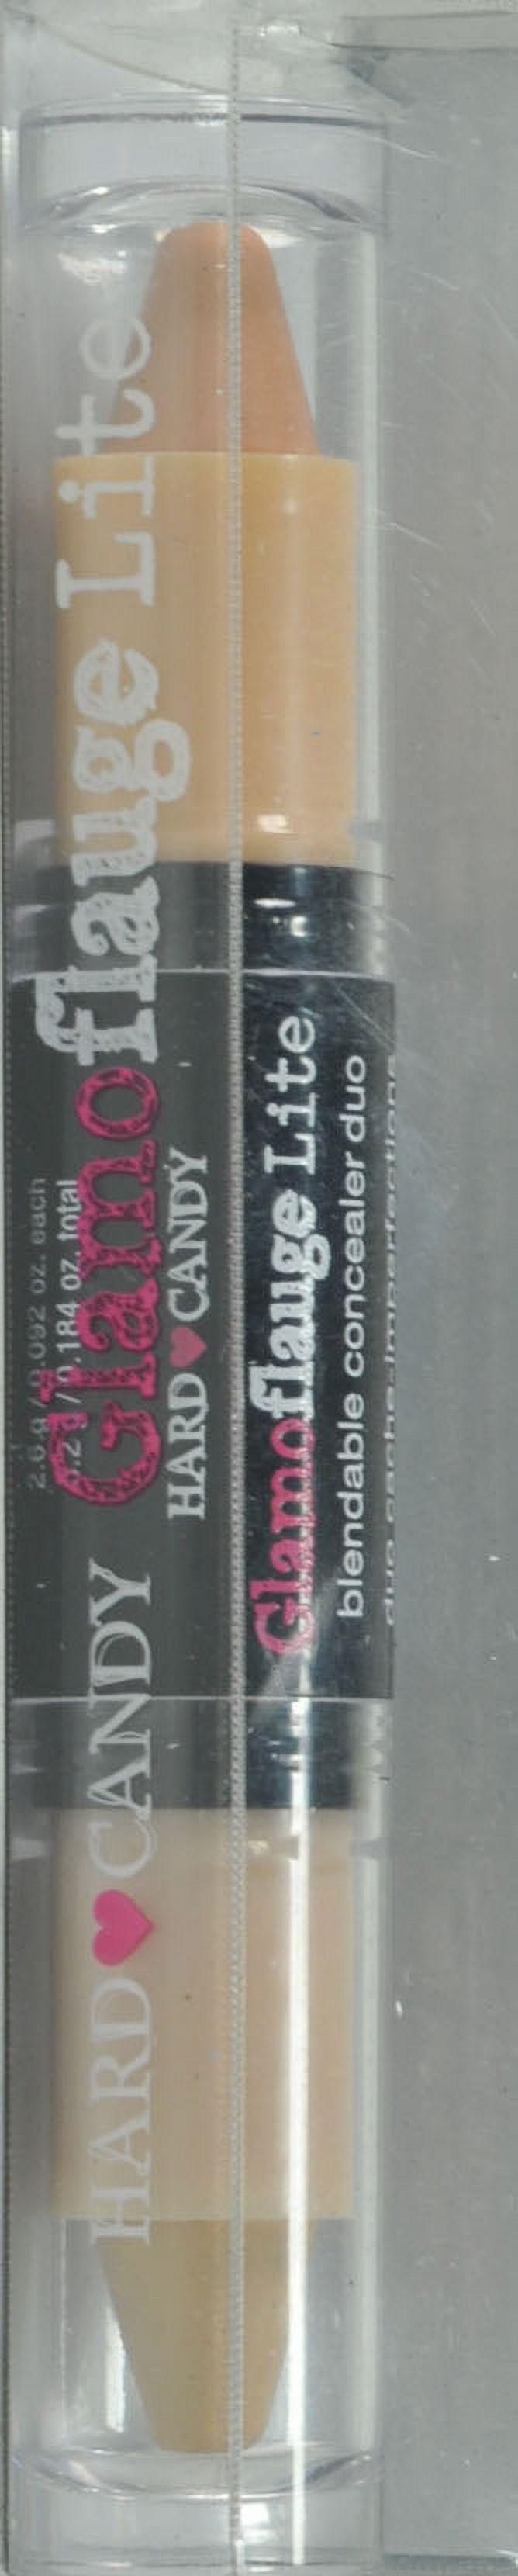 Hard Candy Glamoflauge Lite Blendable Concealer Duo, 756 Light Medium, 0.9 oz - image 2 of 3